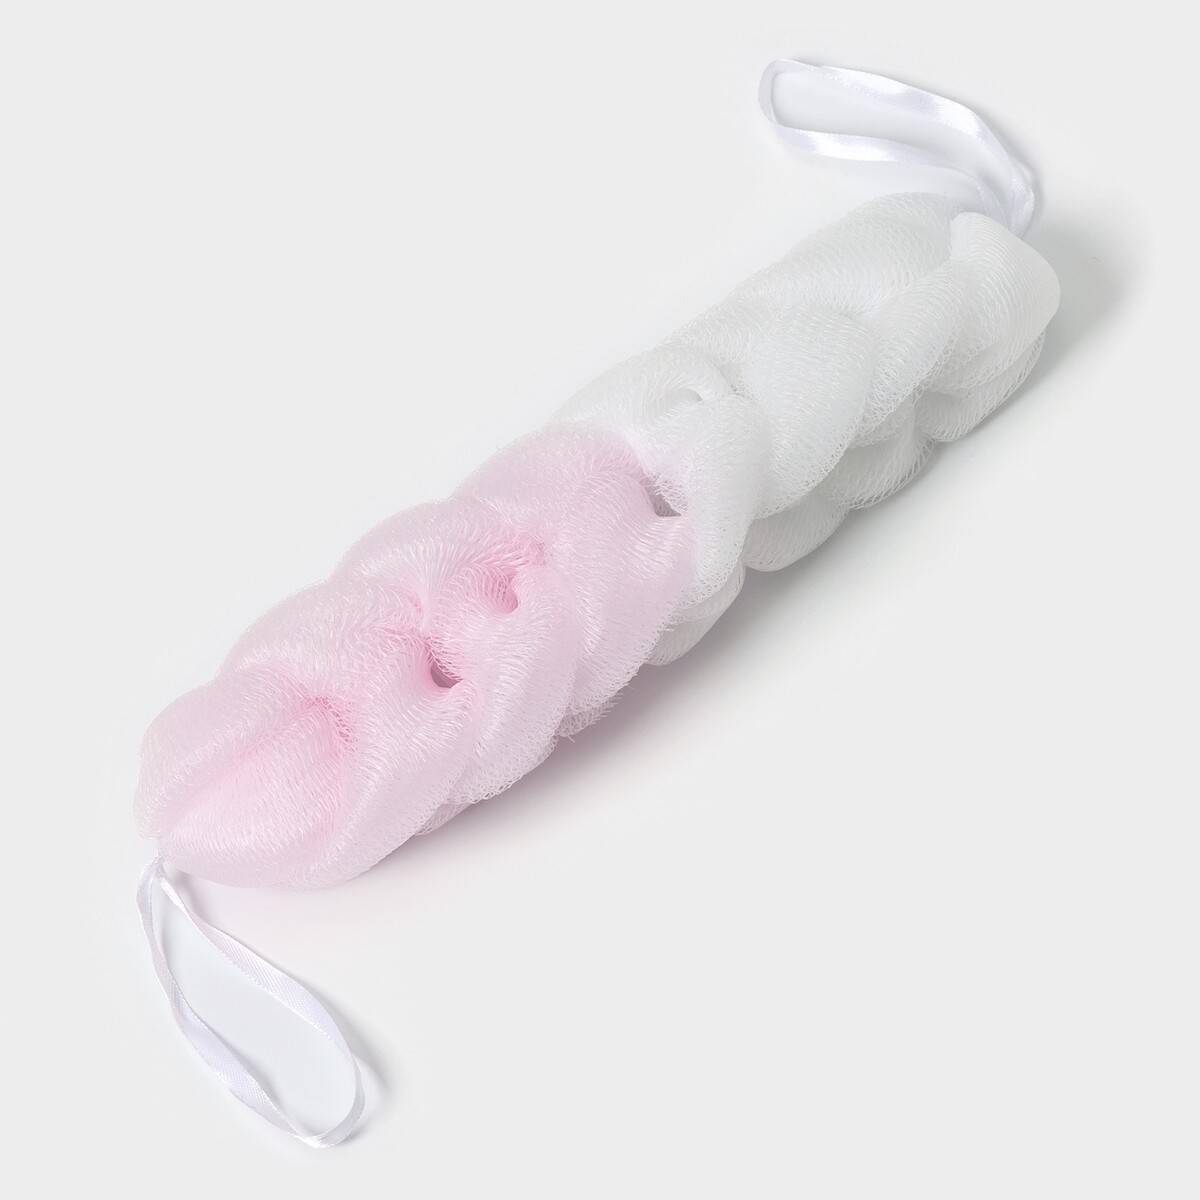 Мочалка - косичка для тела cupellia spa, 70 гр, цвет бело-розовый мочалка брикет для тела